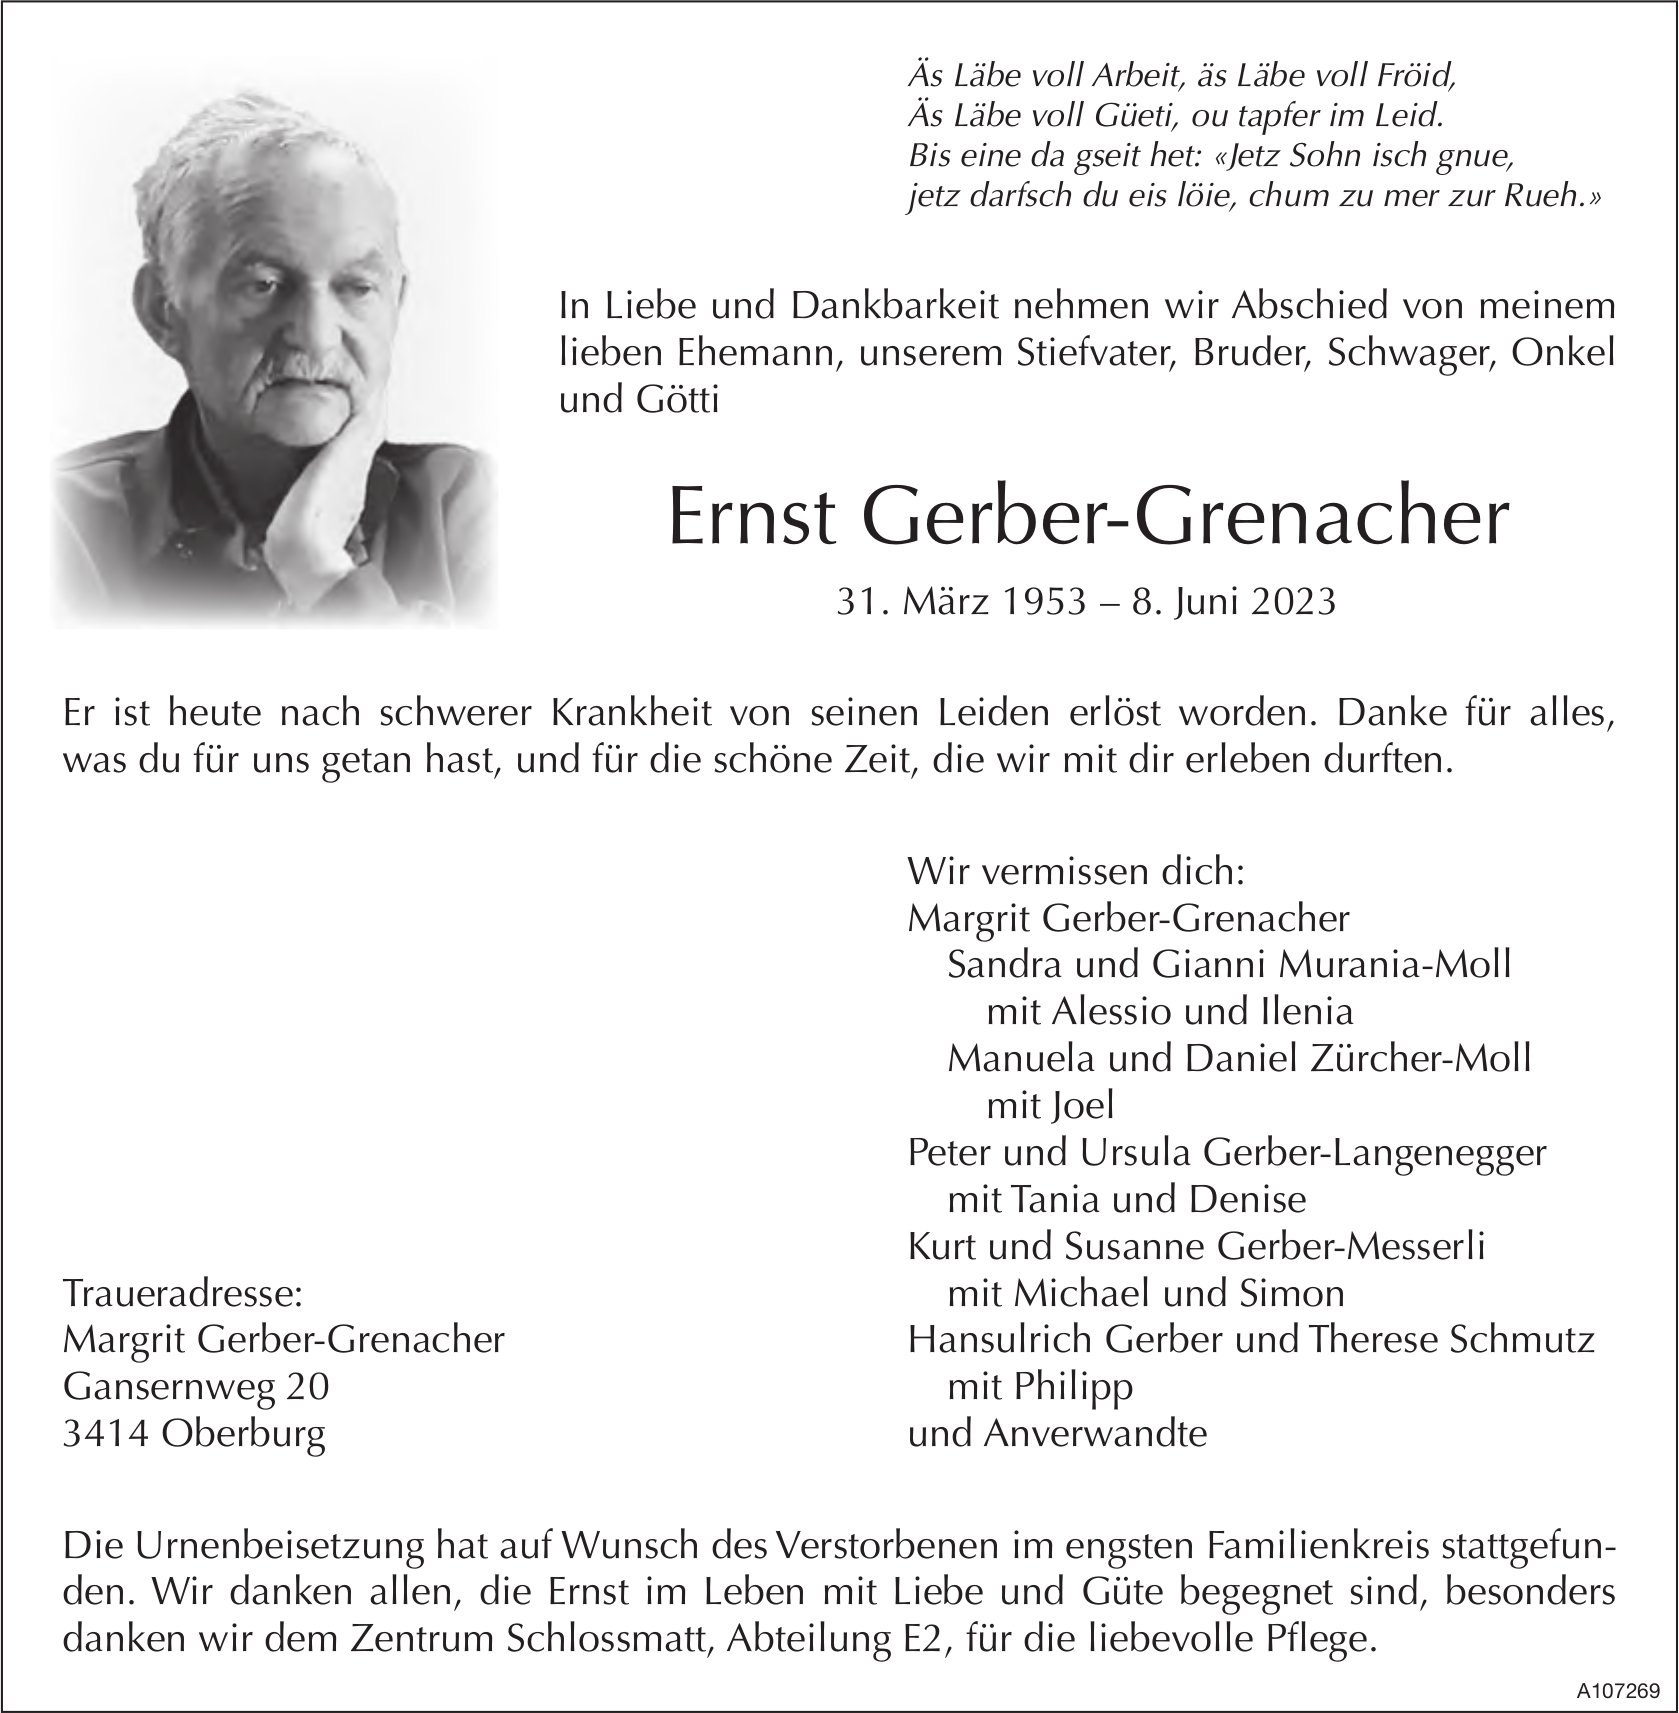 Ernst Gerber-Grenacher, Juni 2023 / TA